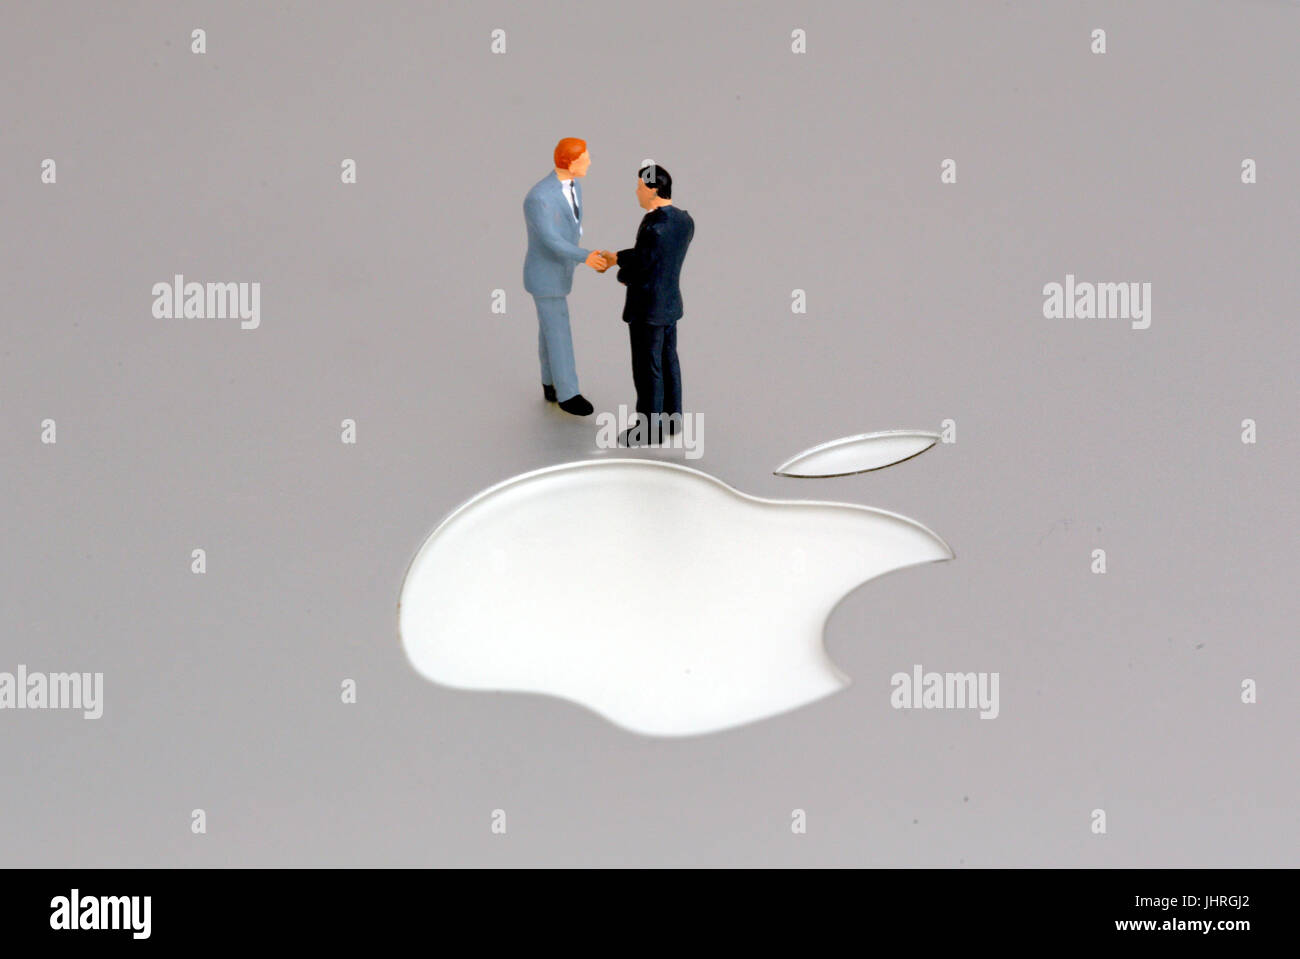 Apple corporation Apple Inc logo business agreement suits businessmen shaking hands Stock Photo